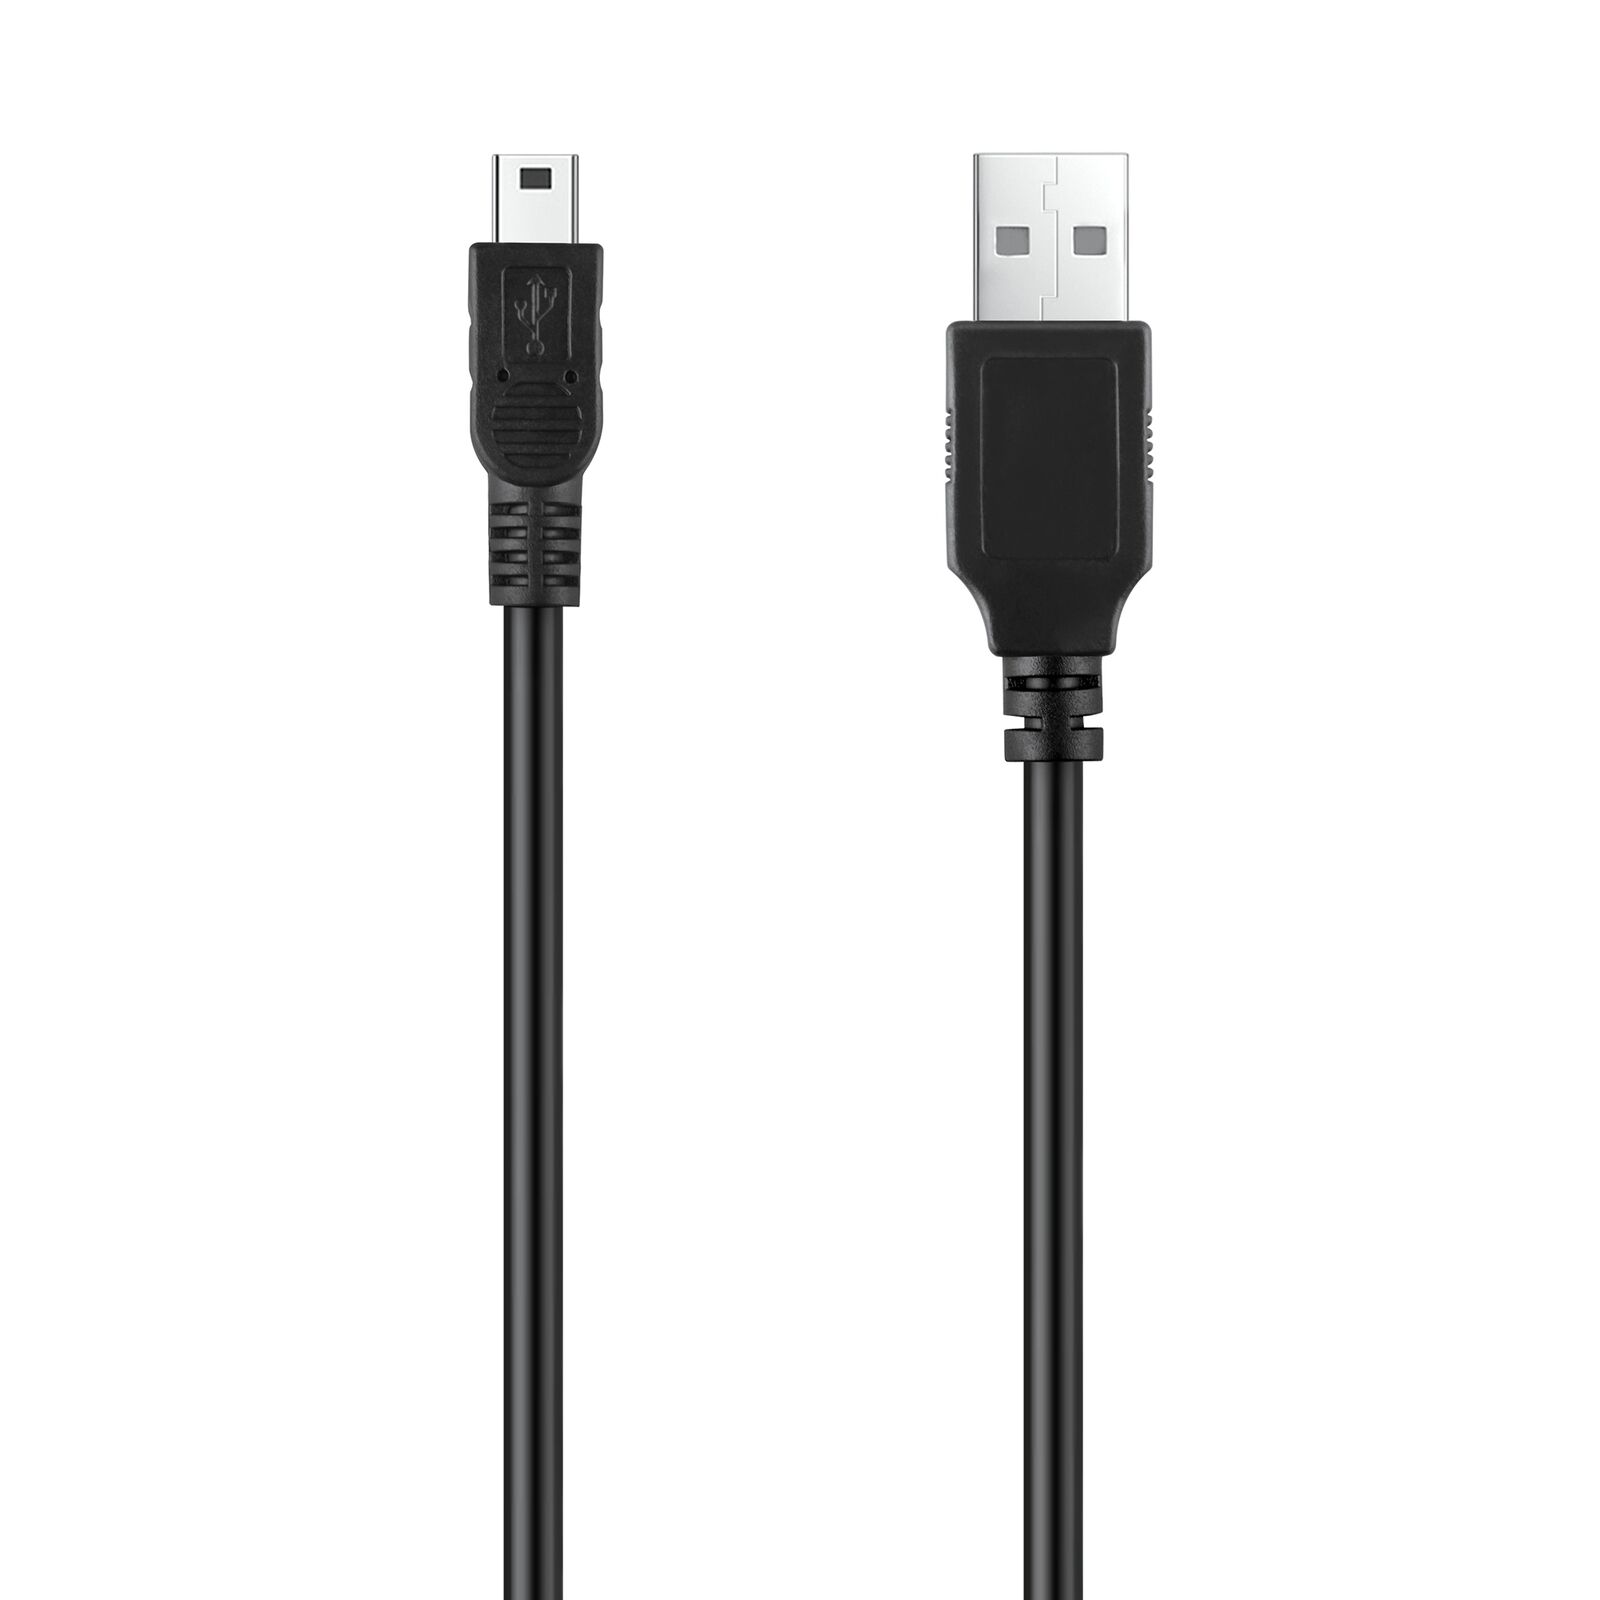 5ft USB Charger Cable Cord for MOTOROLA symbol Model: CS3070 Bar Code Scanner